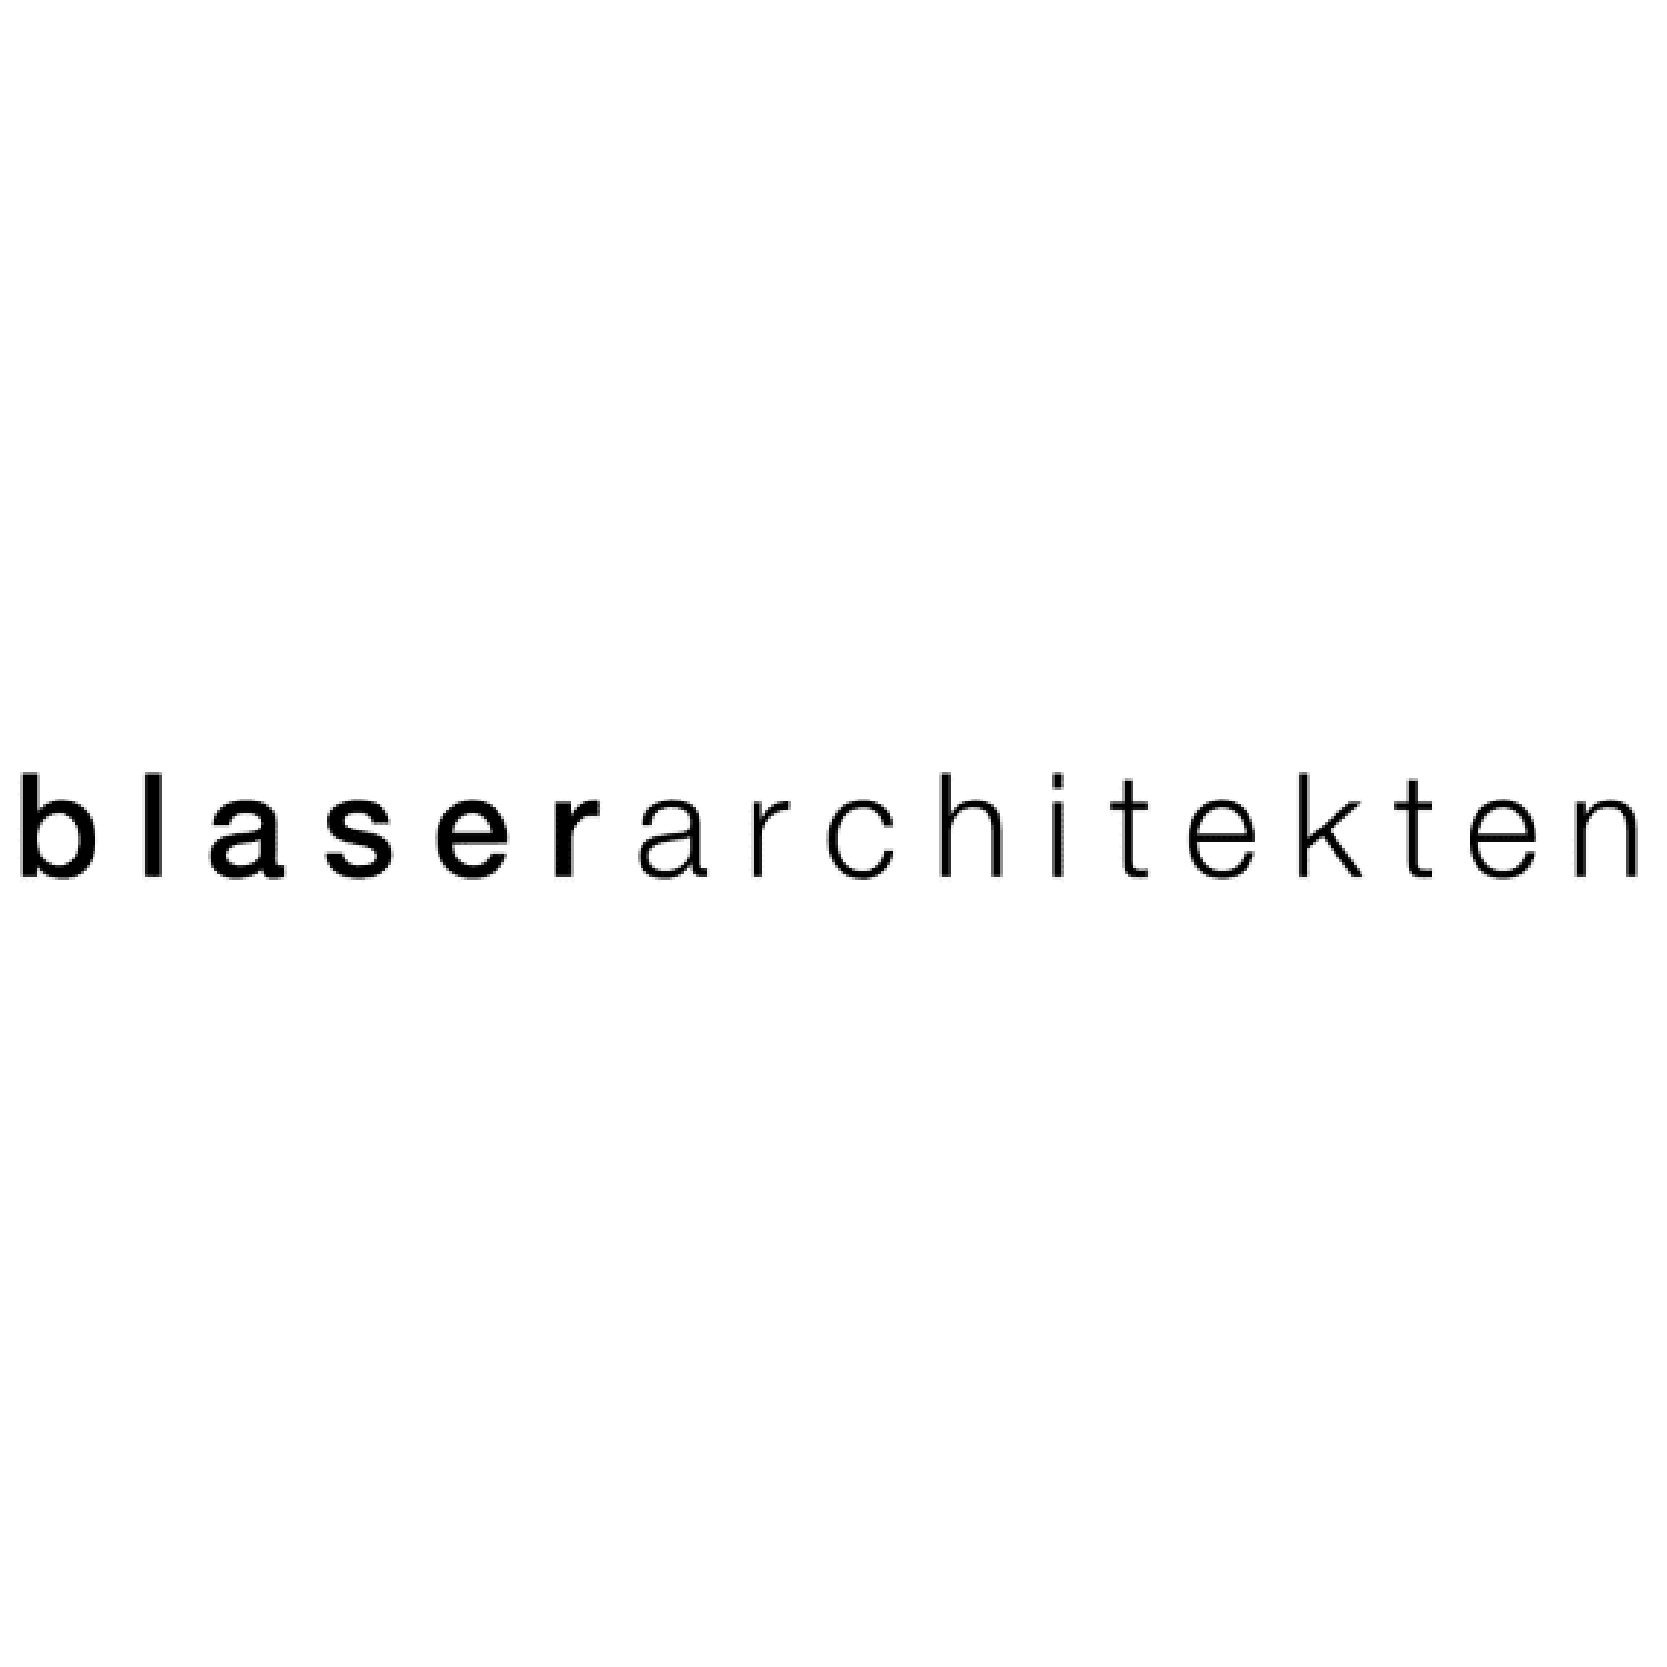 blaserarchitects